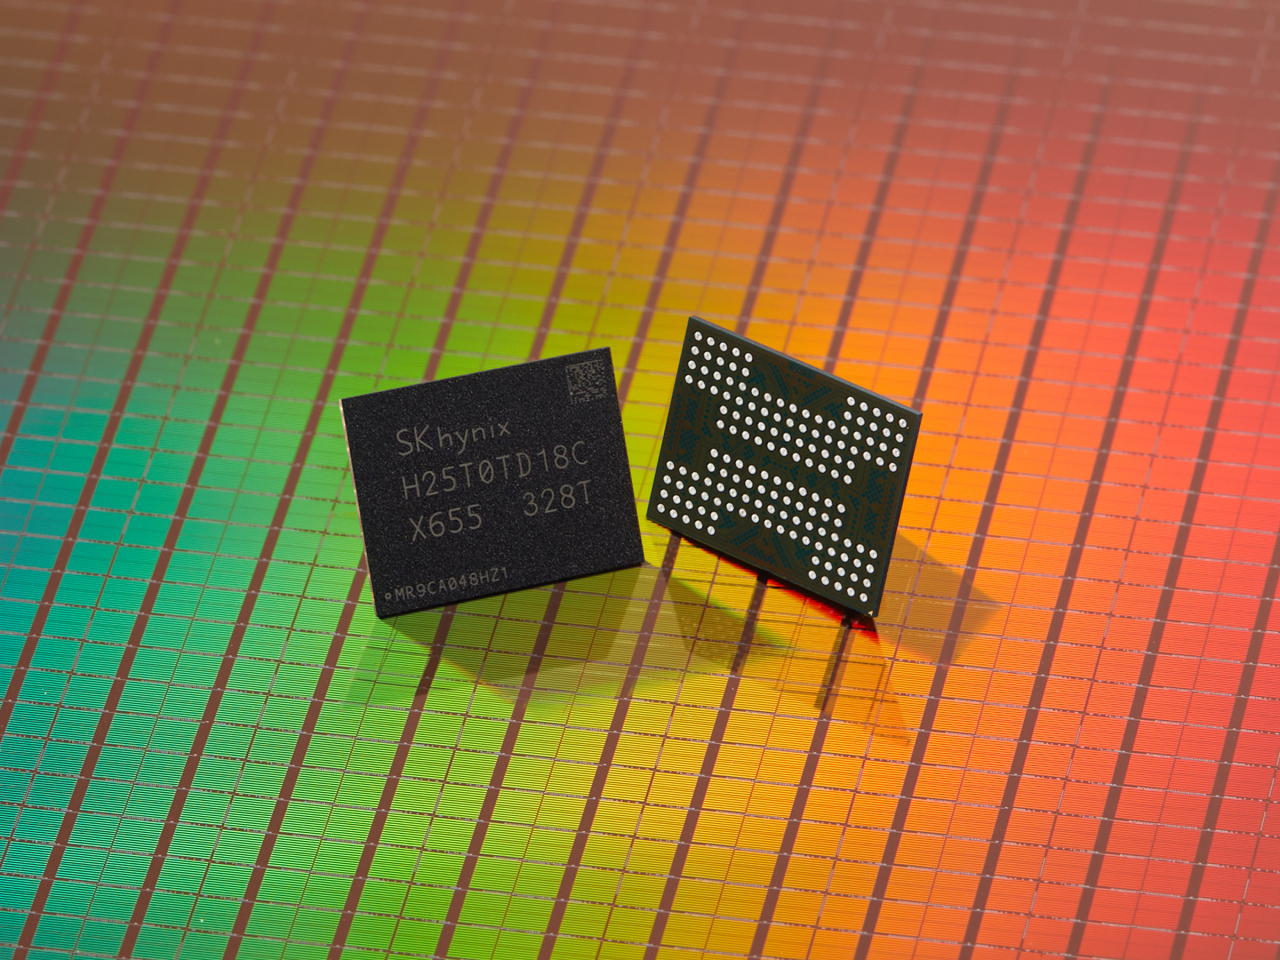 SK hynix's 321-layer 1 terabit TLC 4D NAND Flash (SK hynix)